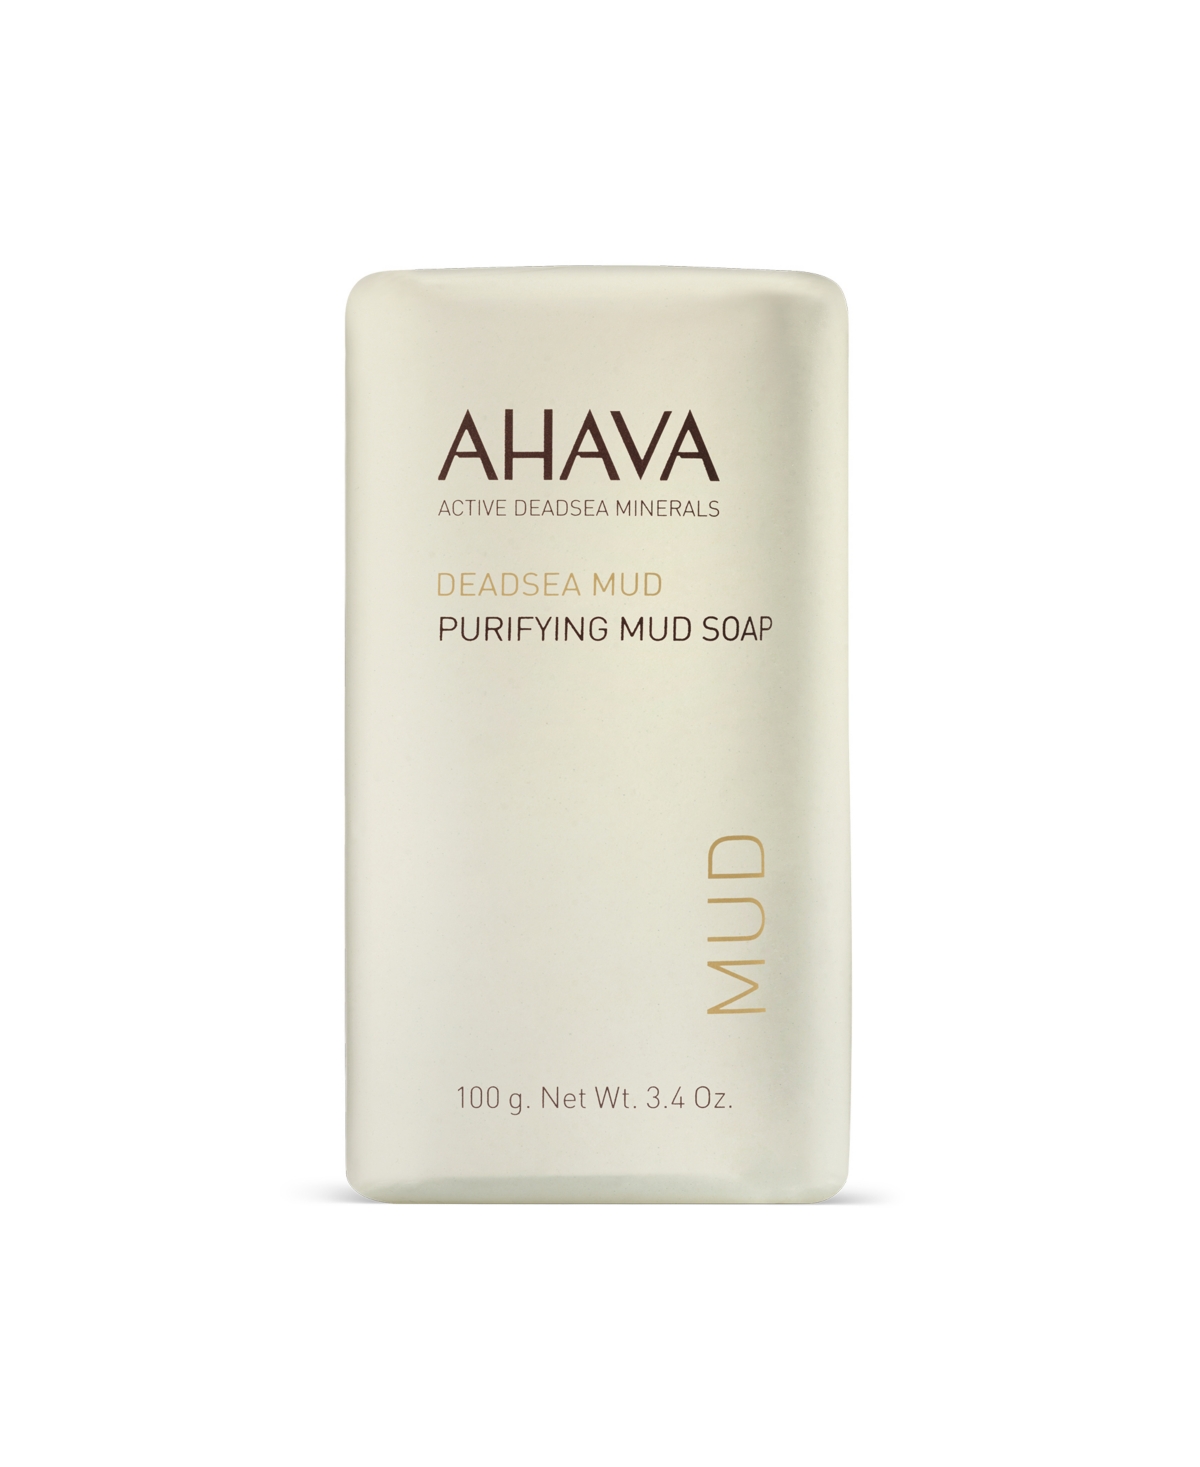 Ahava Purifying Mud Soap, 3.4 oz